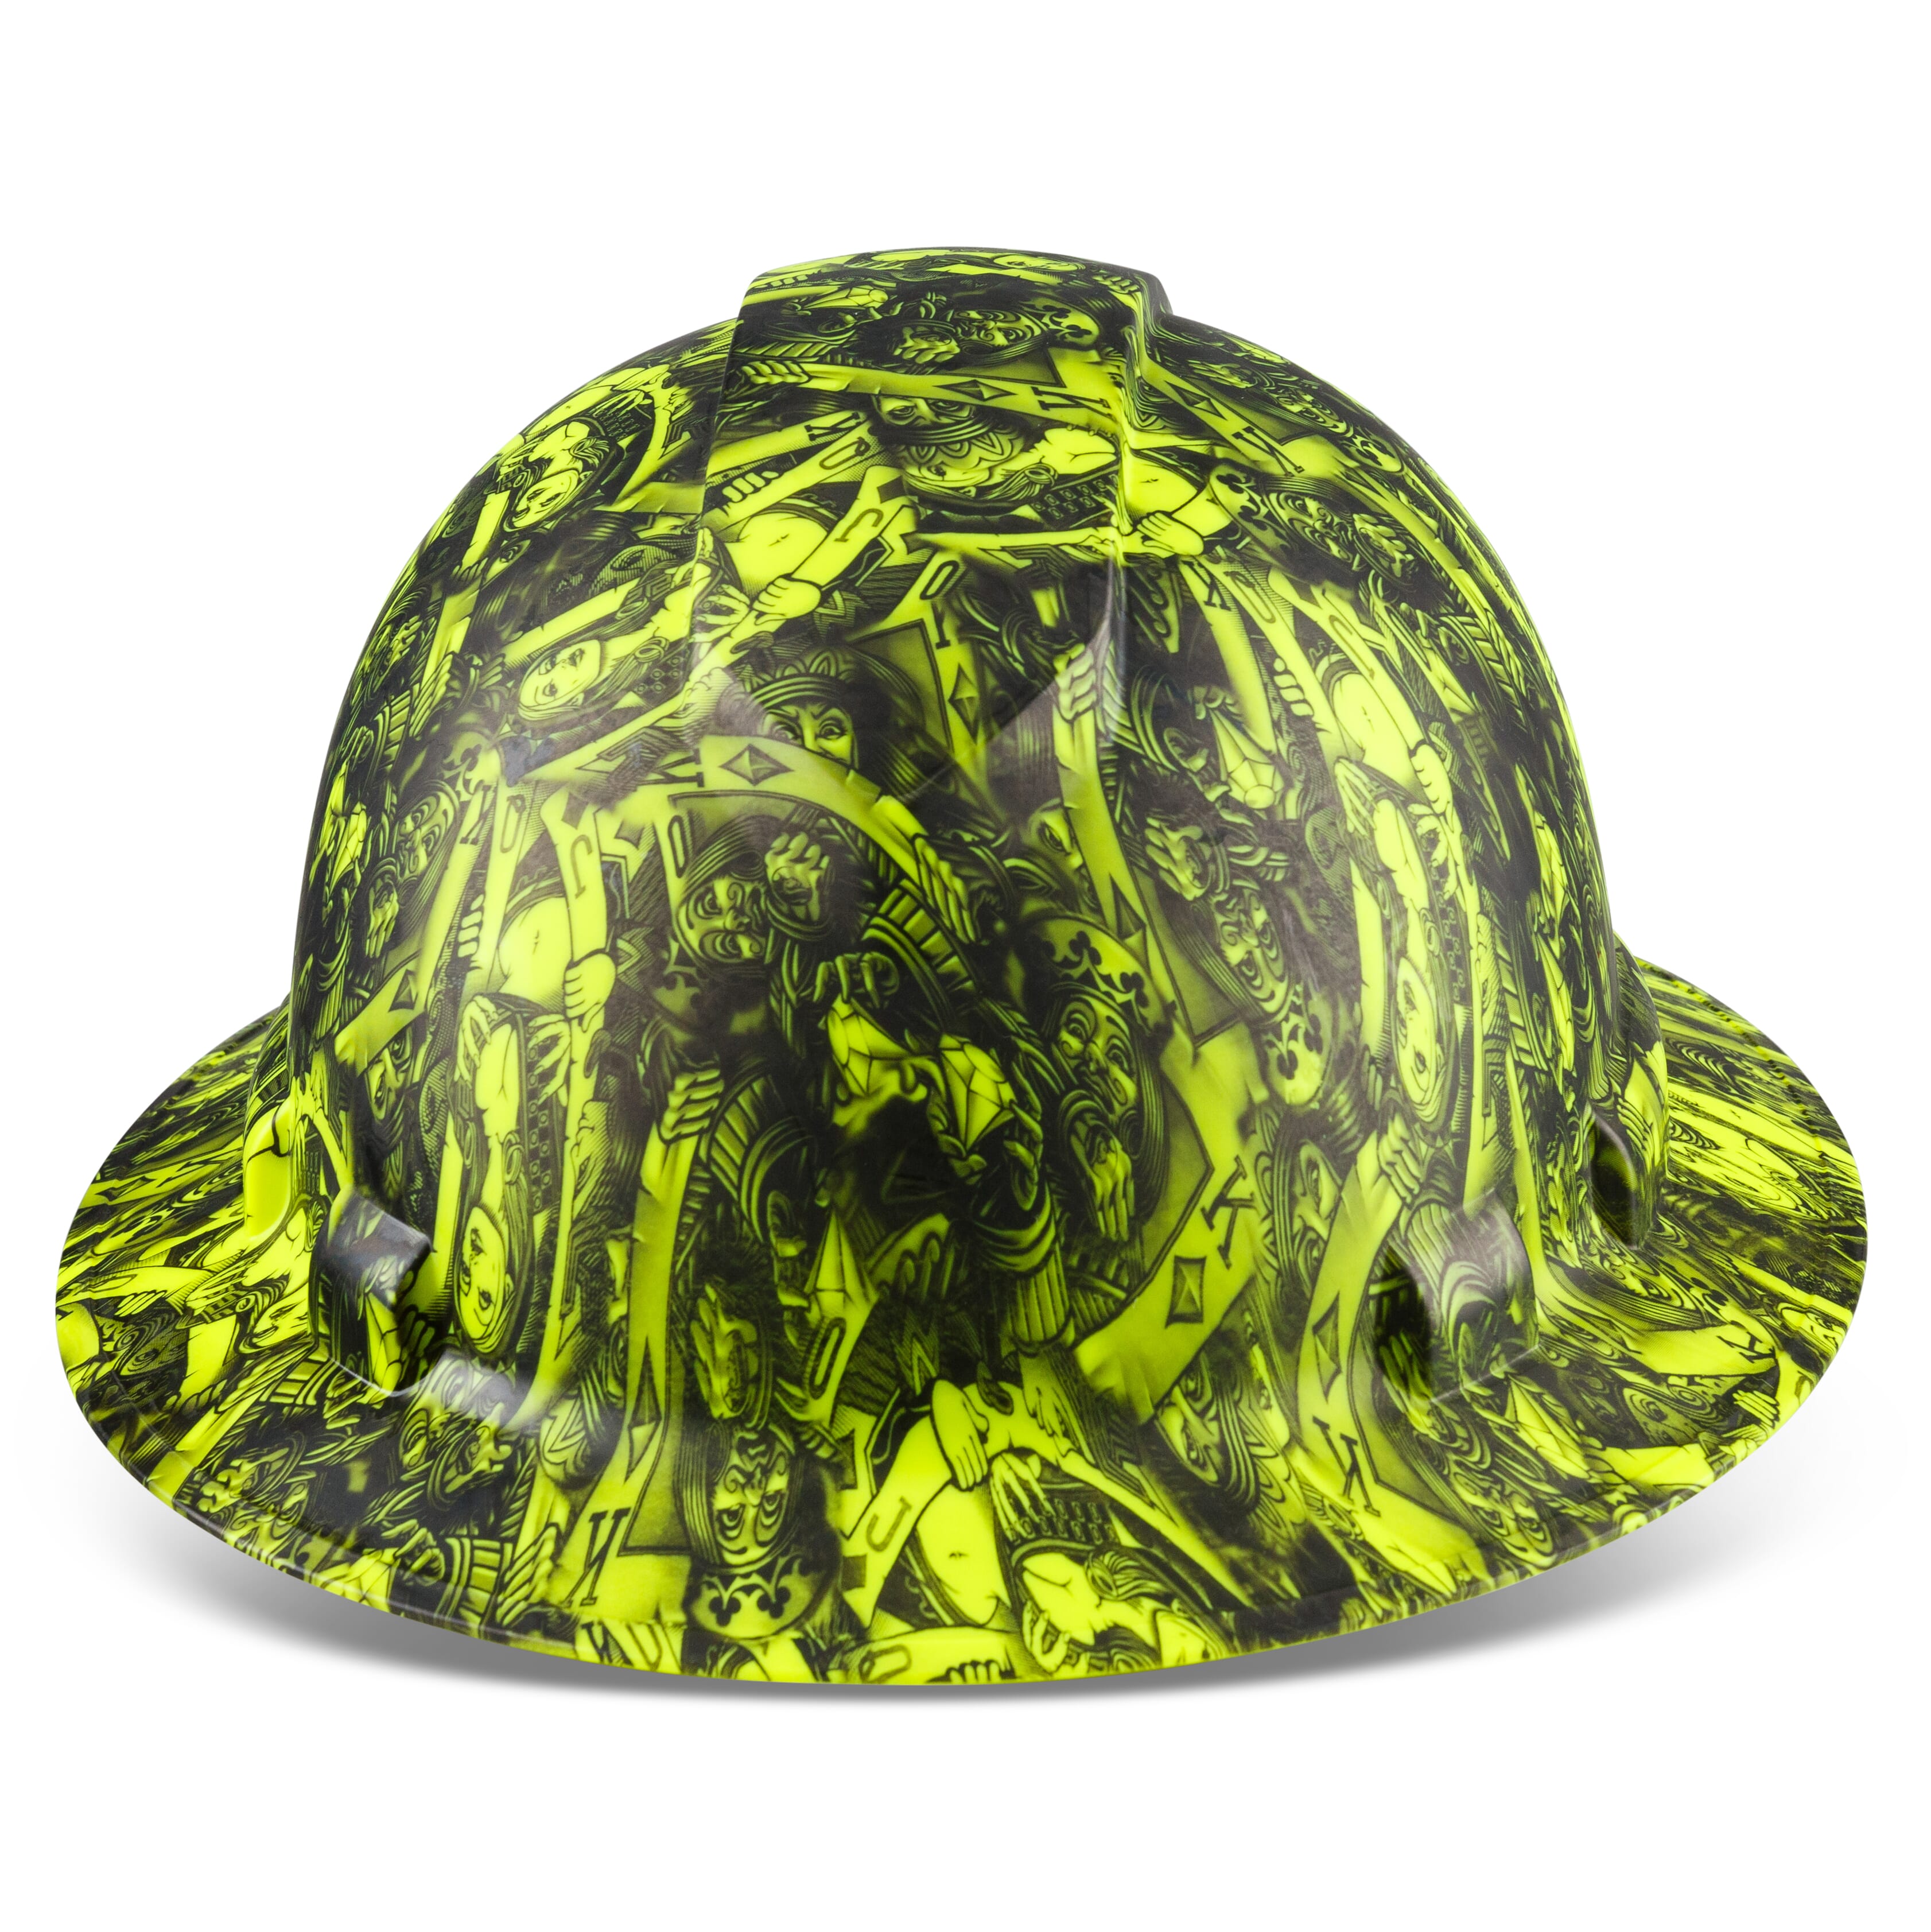 Full Brim Pyramex Hi Vis Lime Hard Hat, Custom Queen Of Hearts Design, Safety Helmet, 6 Point